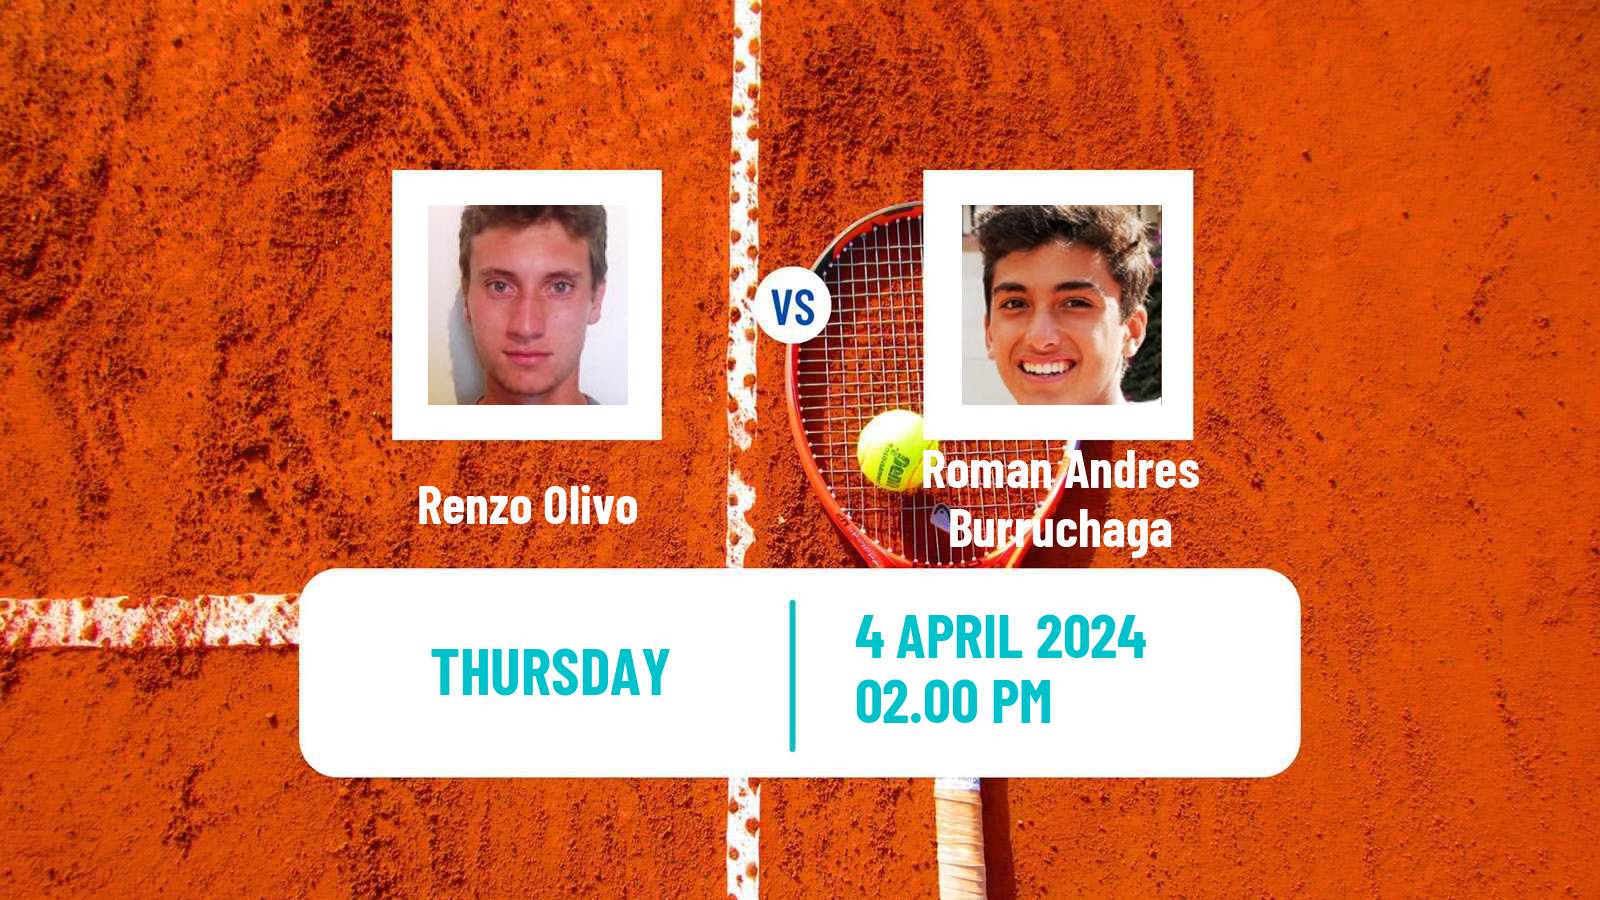 Tennis Florianopolis Challenger Men Renzo Olivo - Roman Andres Burruchaga